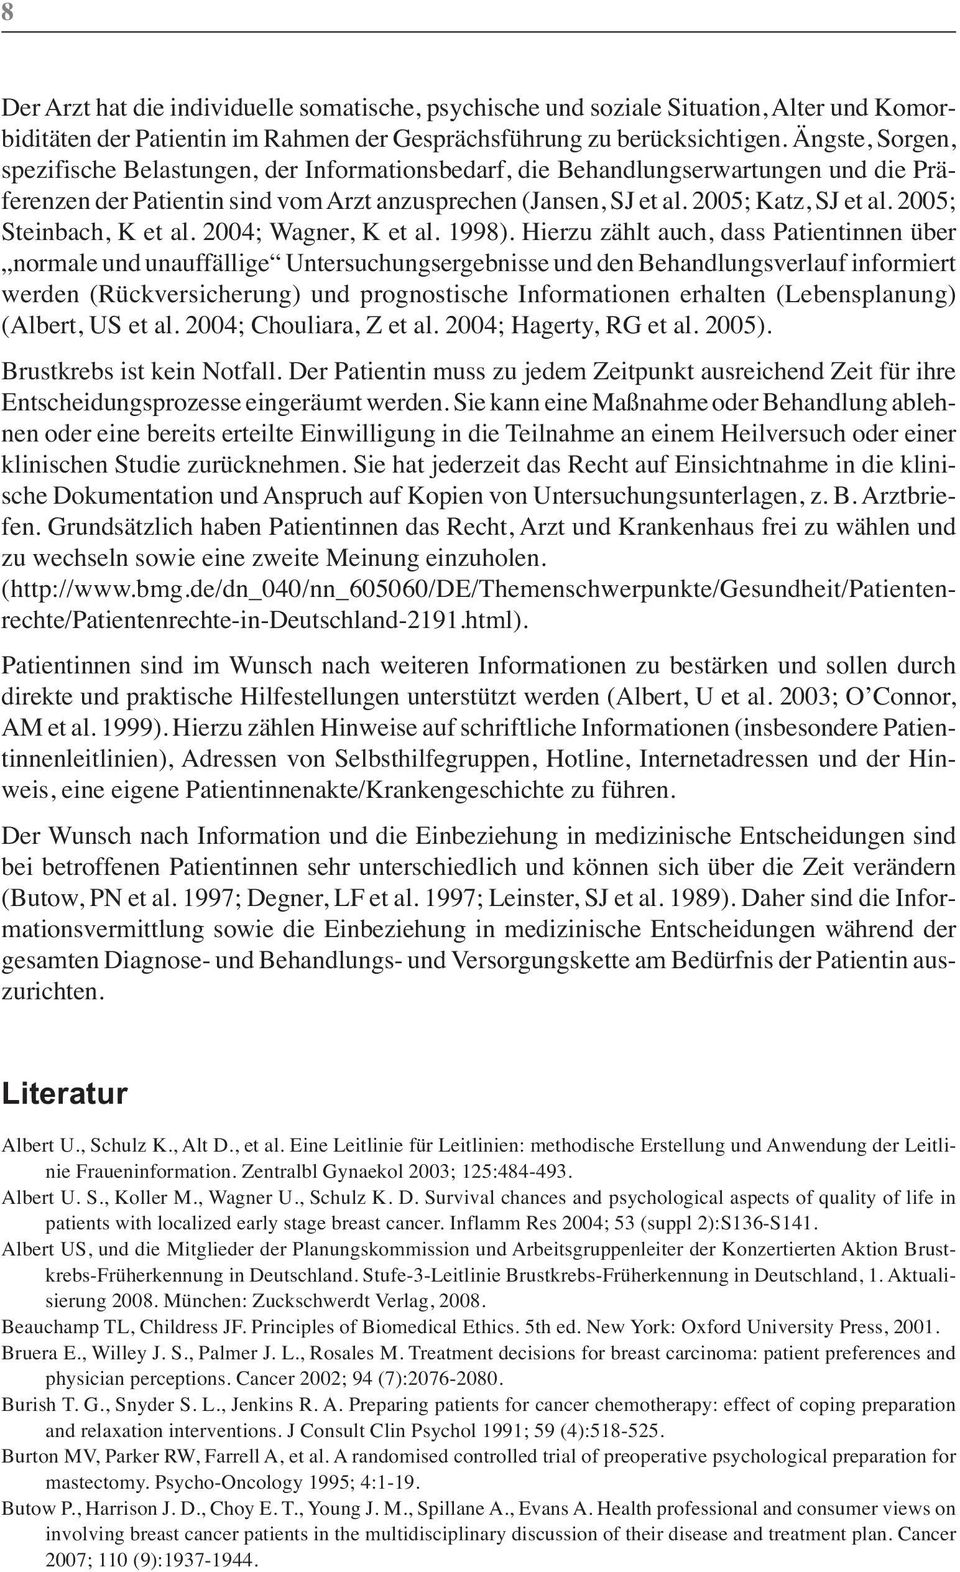 2005; Steinbach, K et al. 2004; Wagner, K et al. 1998).